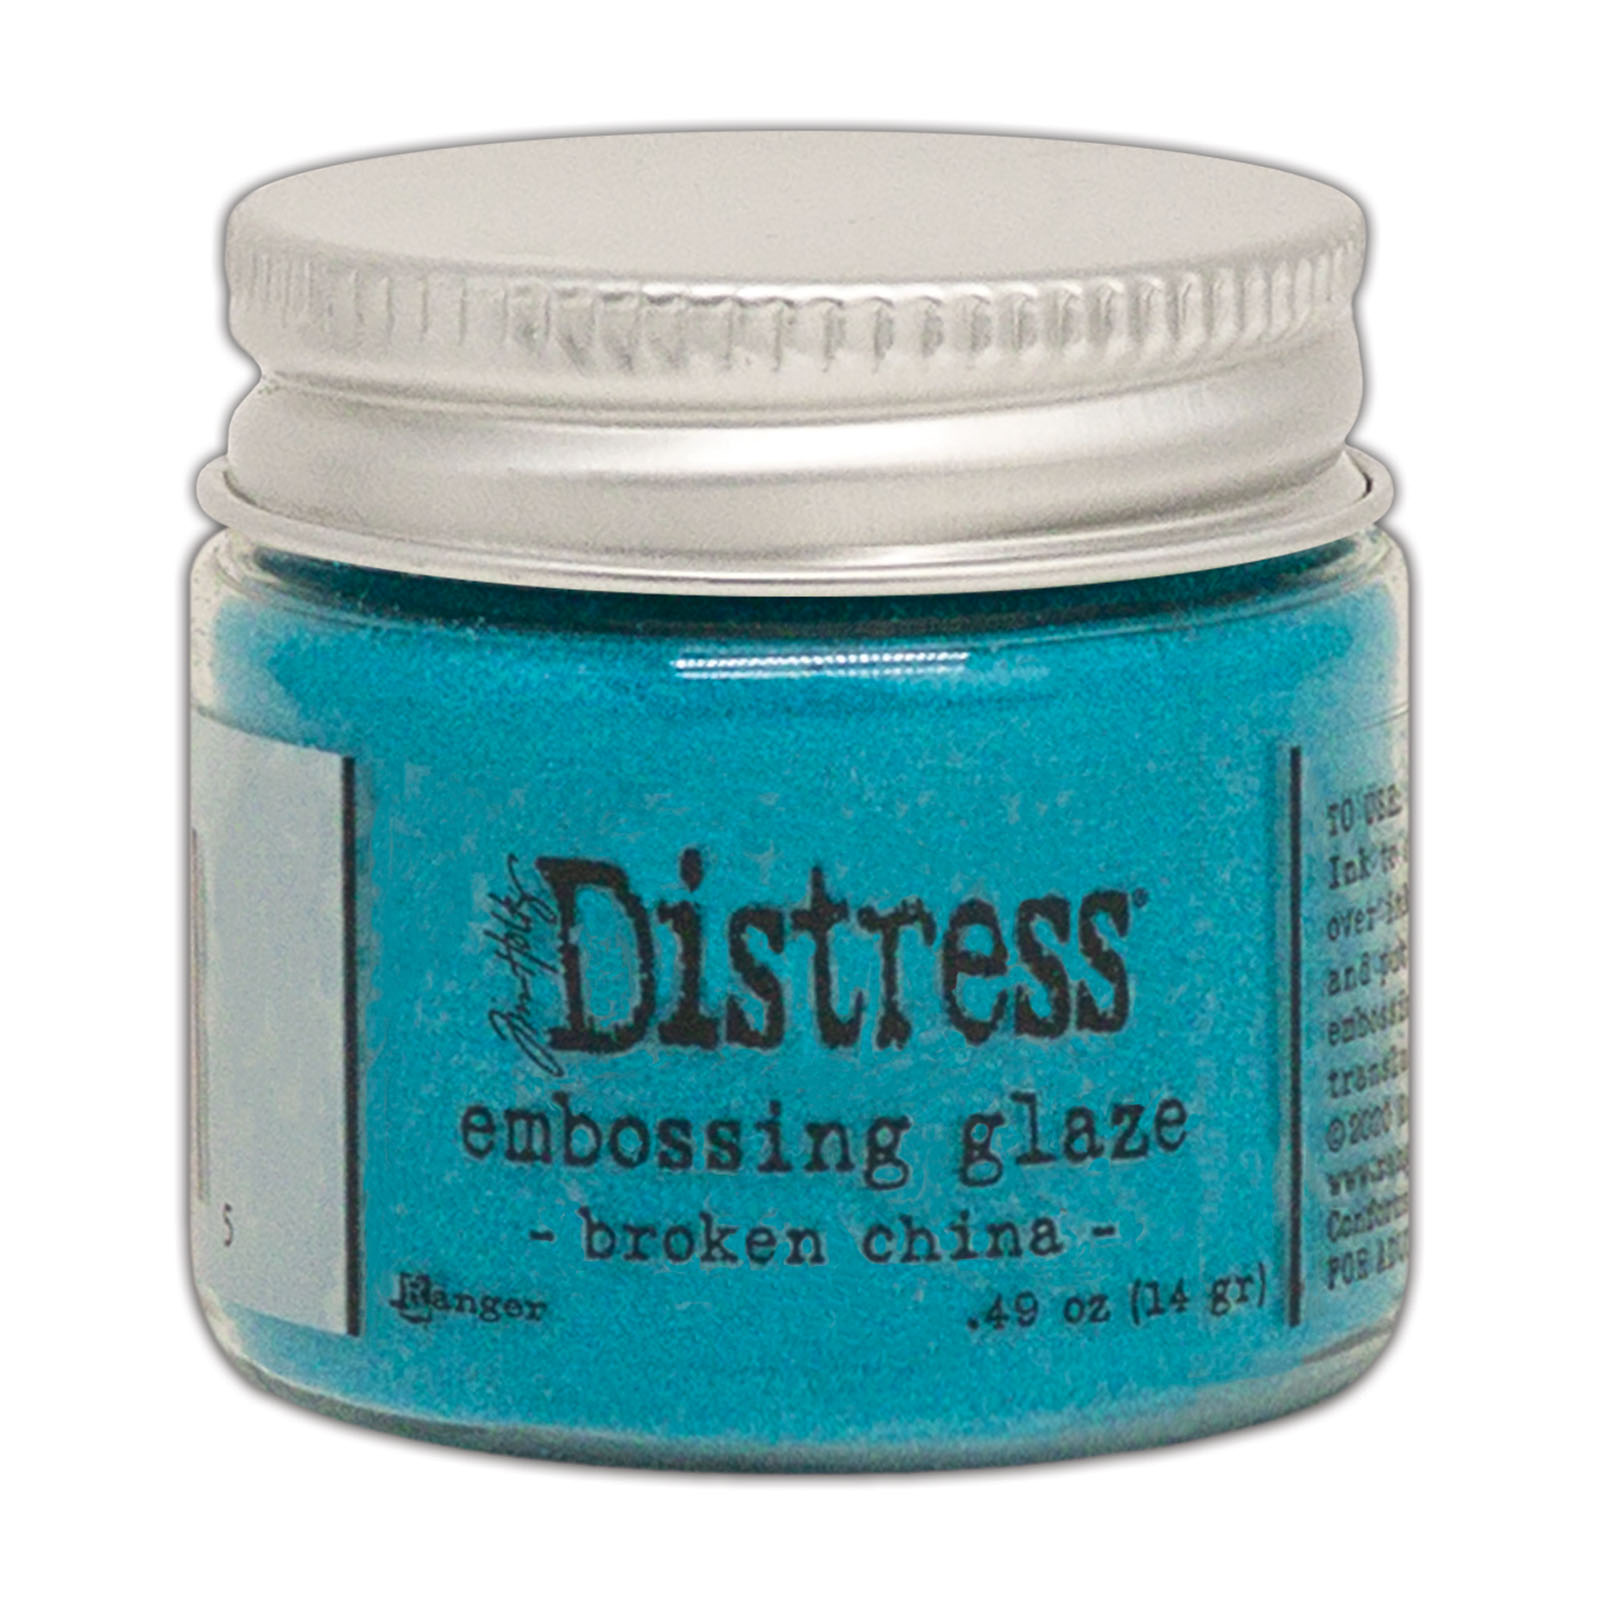 Ranger • Distress embossing glaze Broken china